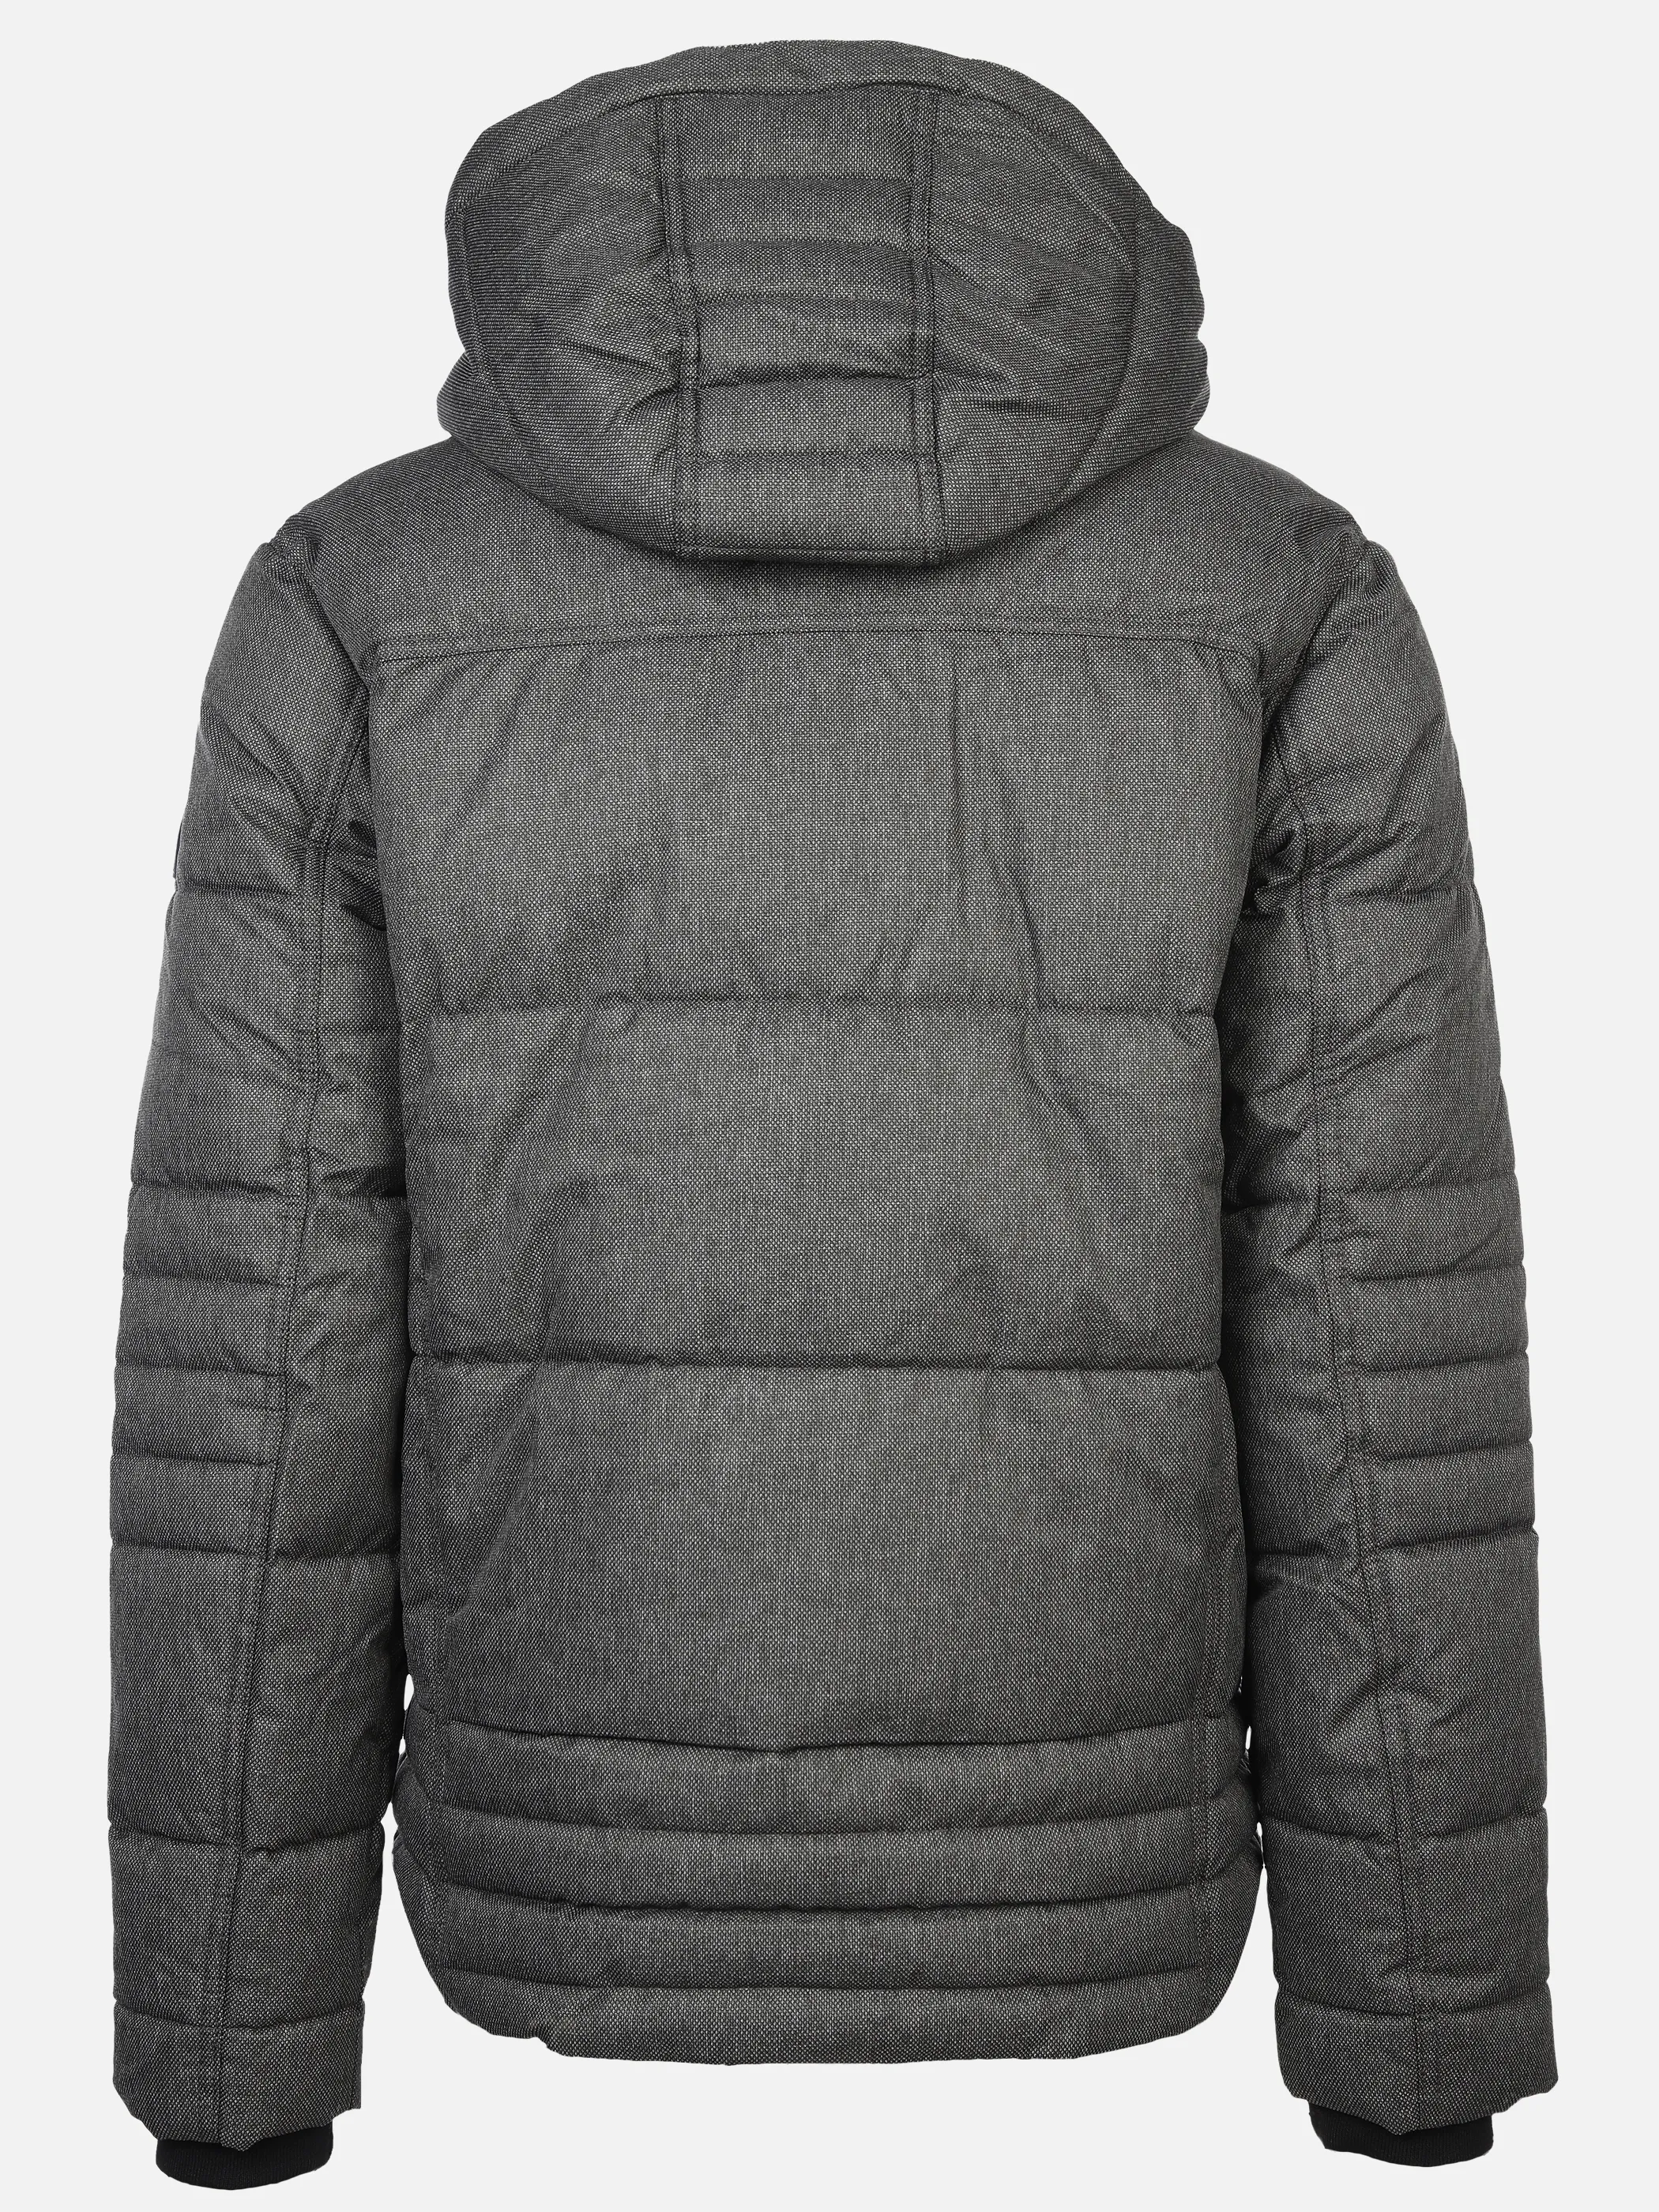 Tom Tailor 1038935 puffer jacket with hood Grau 884260 28007 2